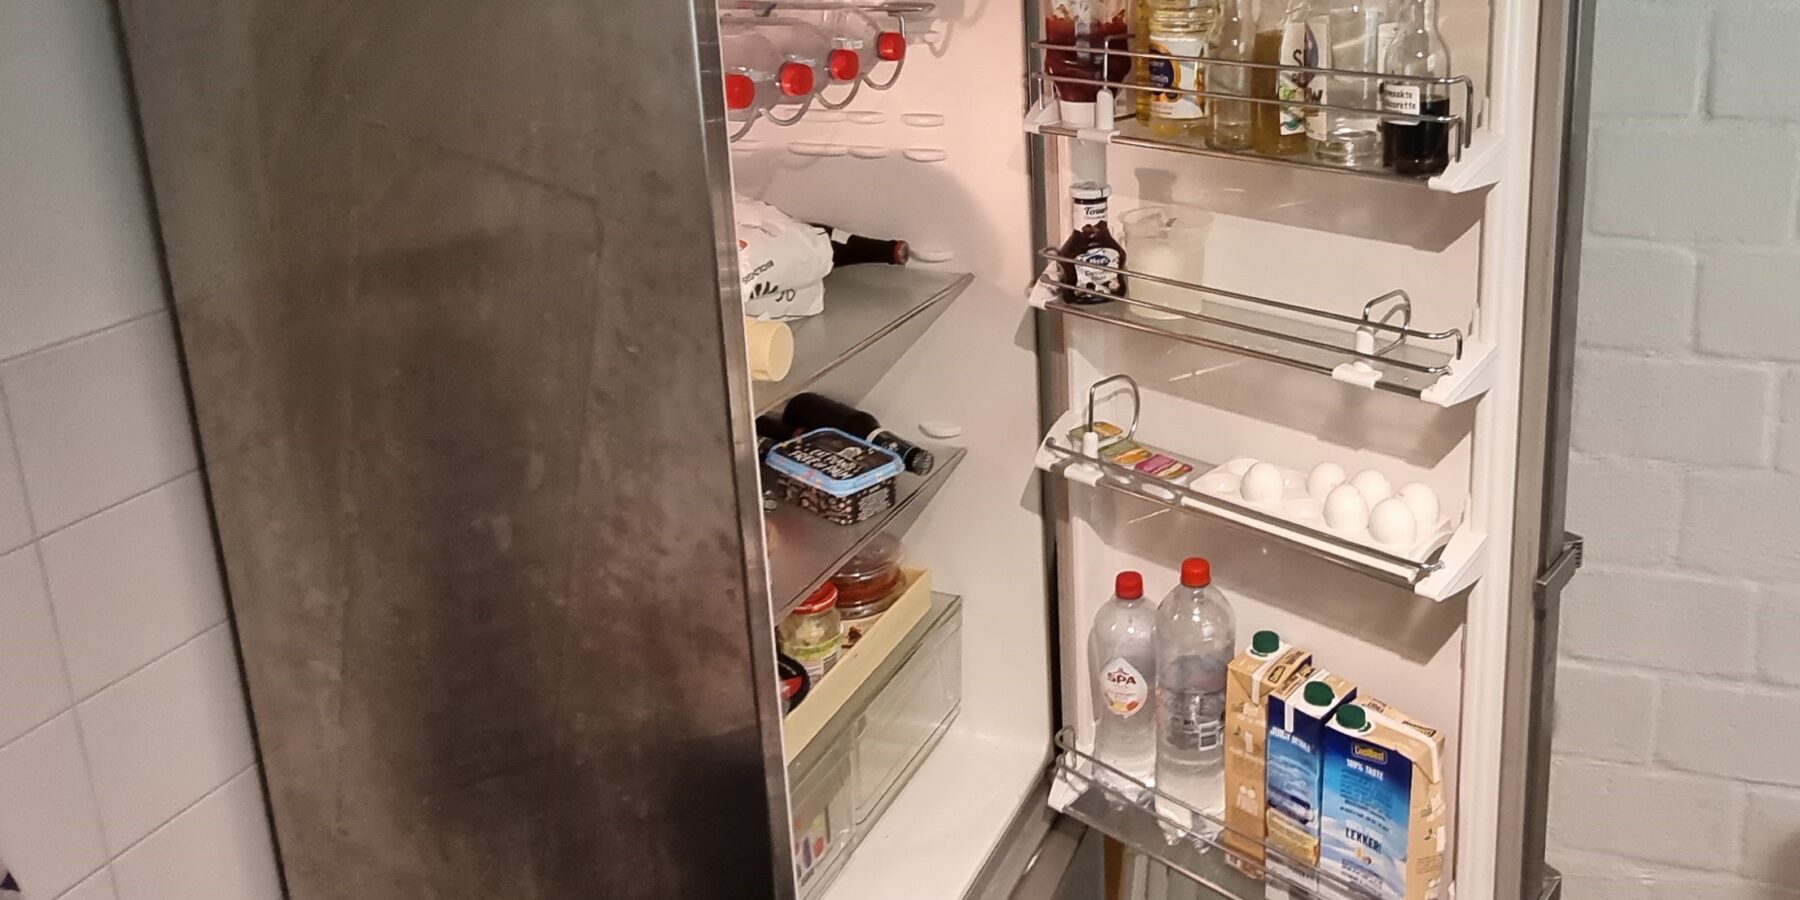 tong Ouderling waarde Leidse minima krijgen waardebon van driehonderd euro voor nieuwe koelkast |  Sleutelstad